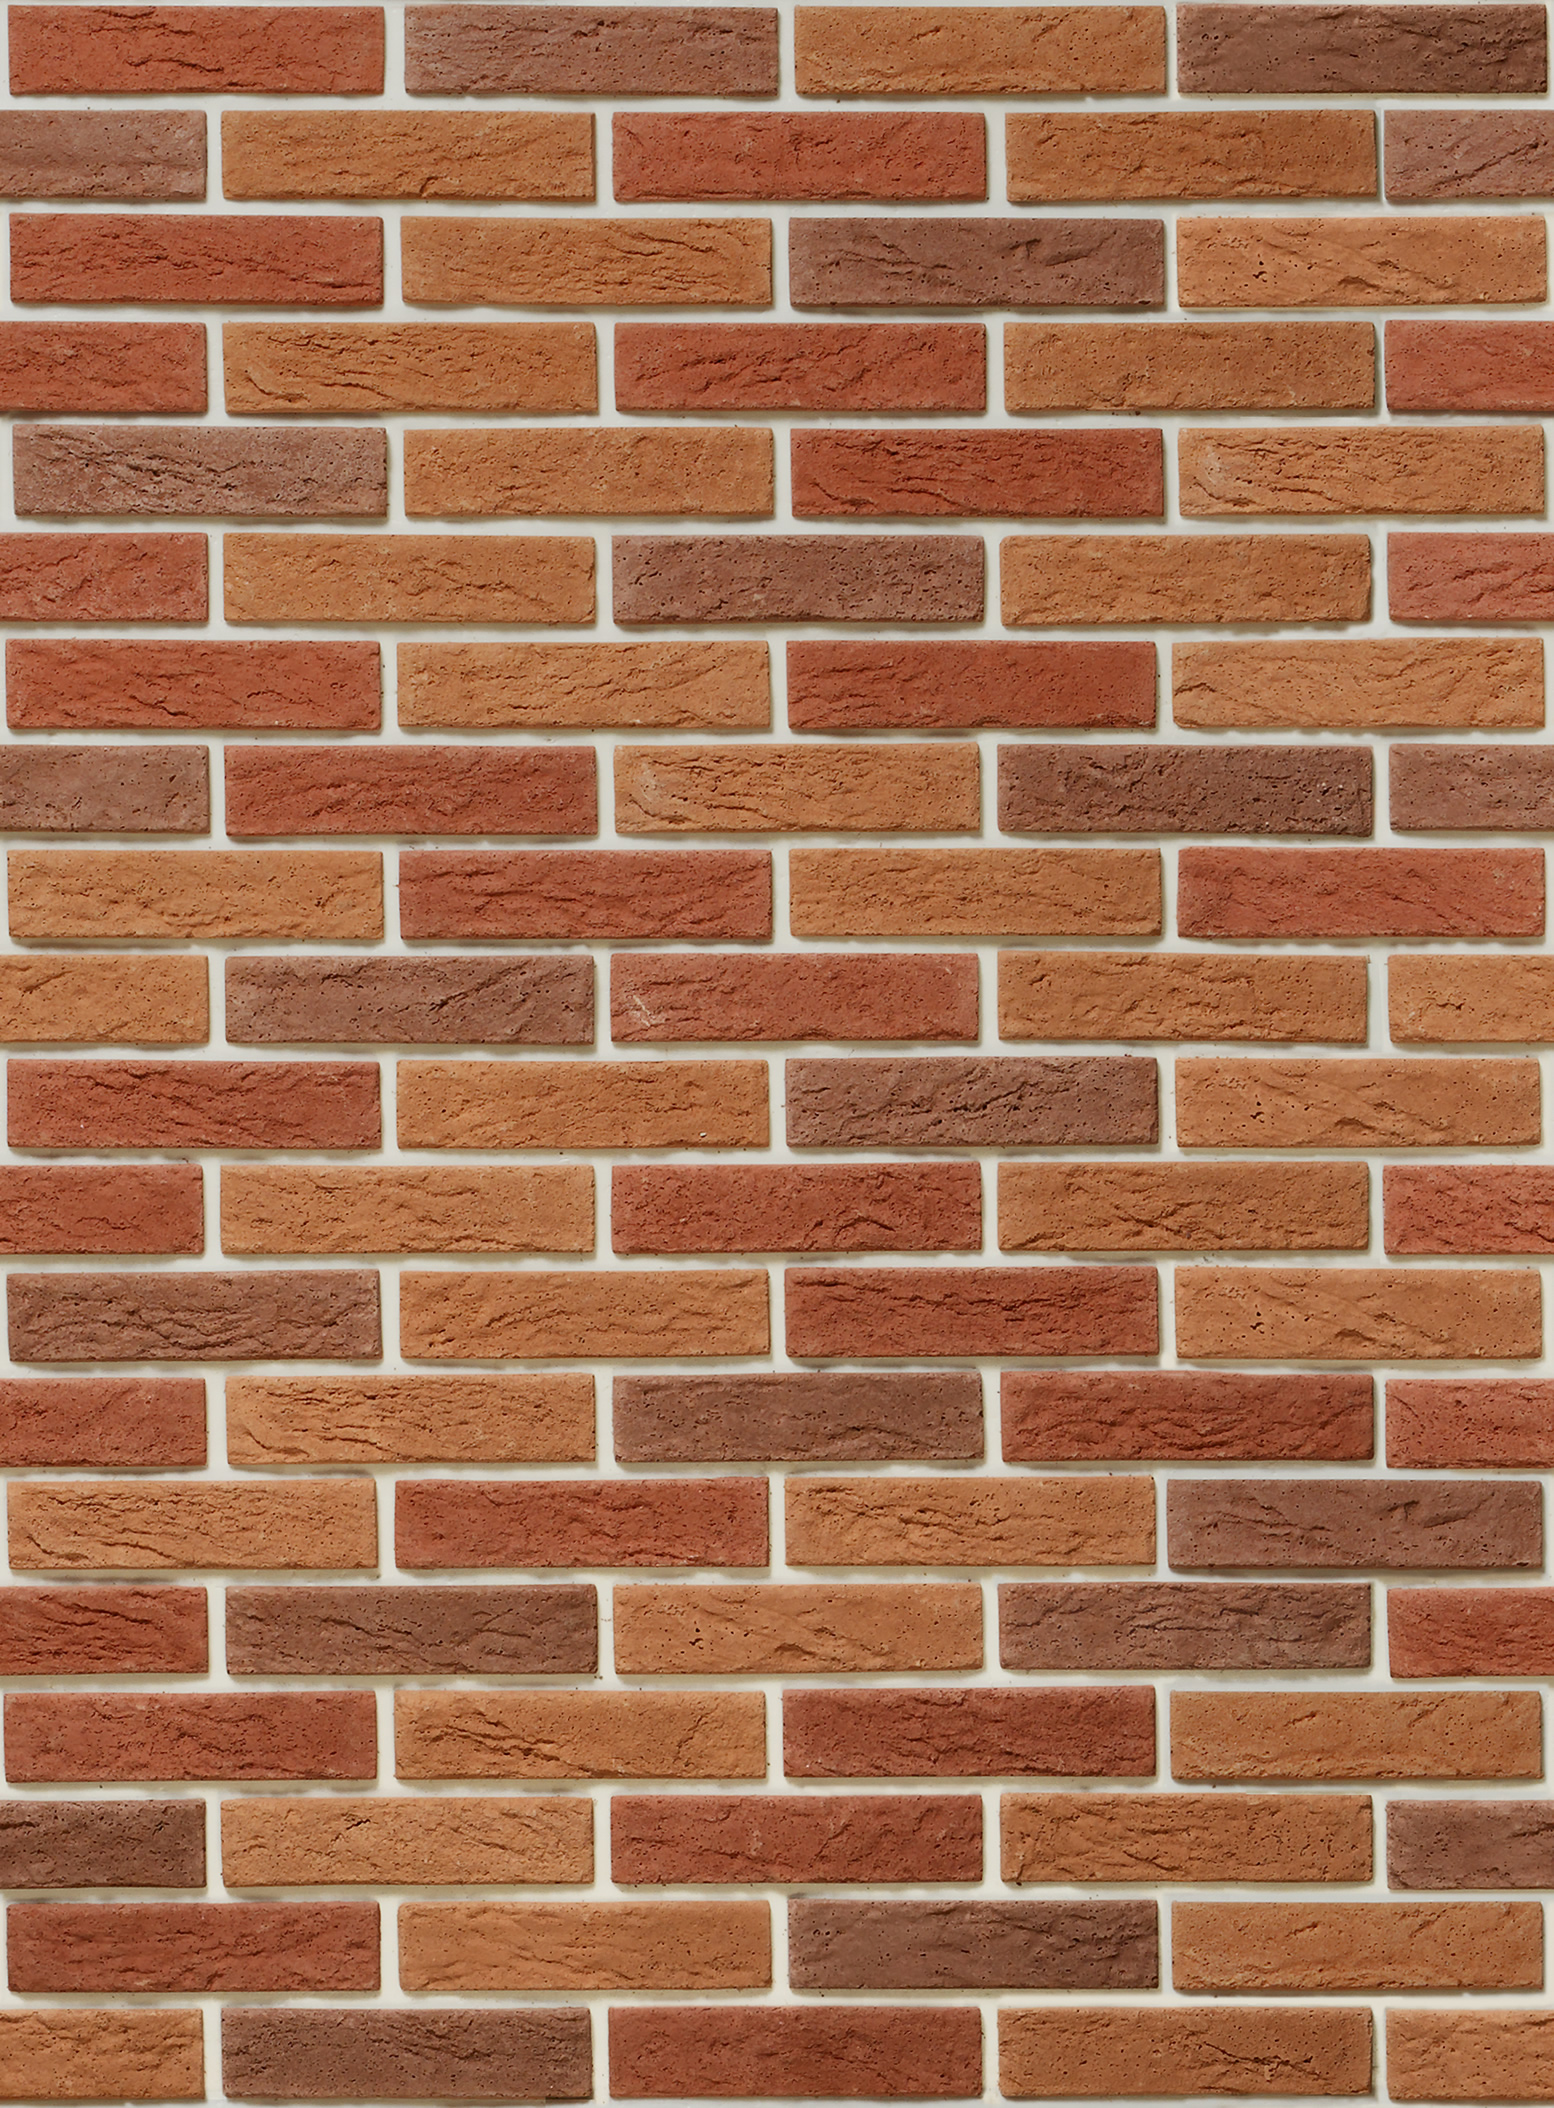 Bricks Background Texture Photo Brick Wall